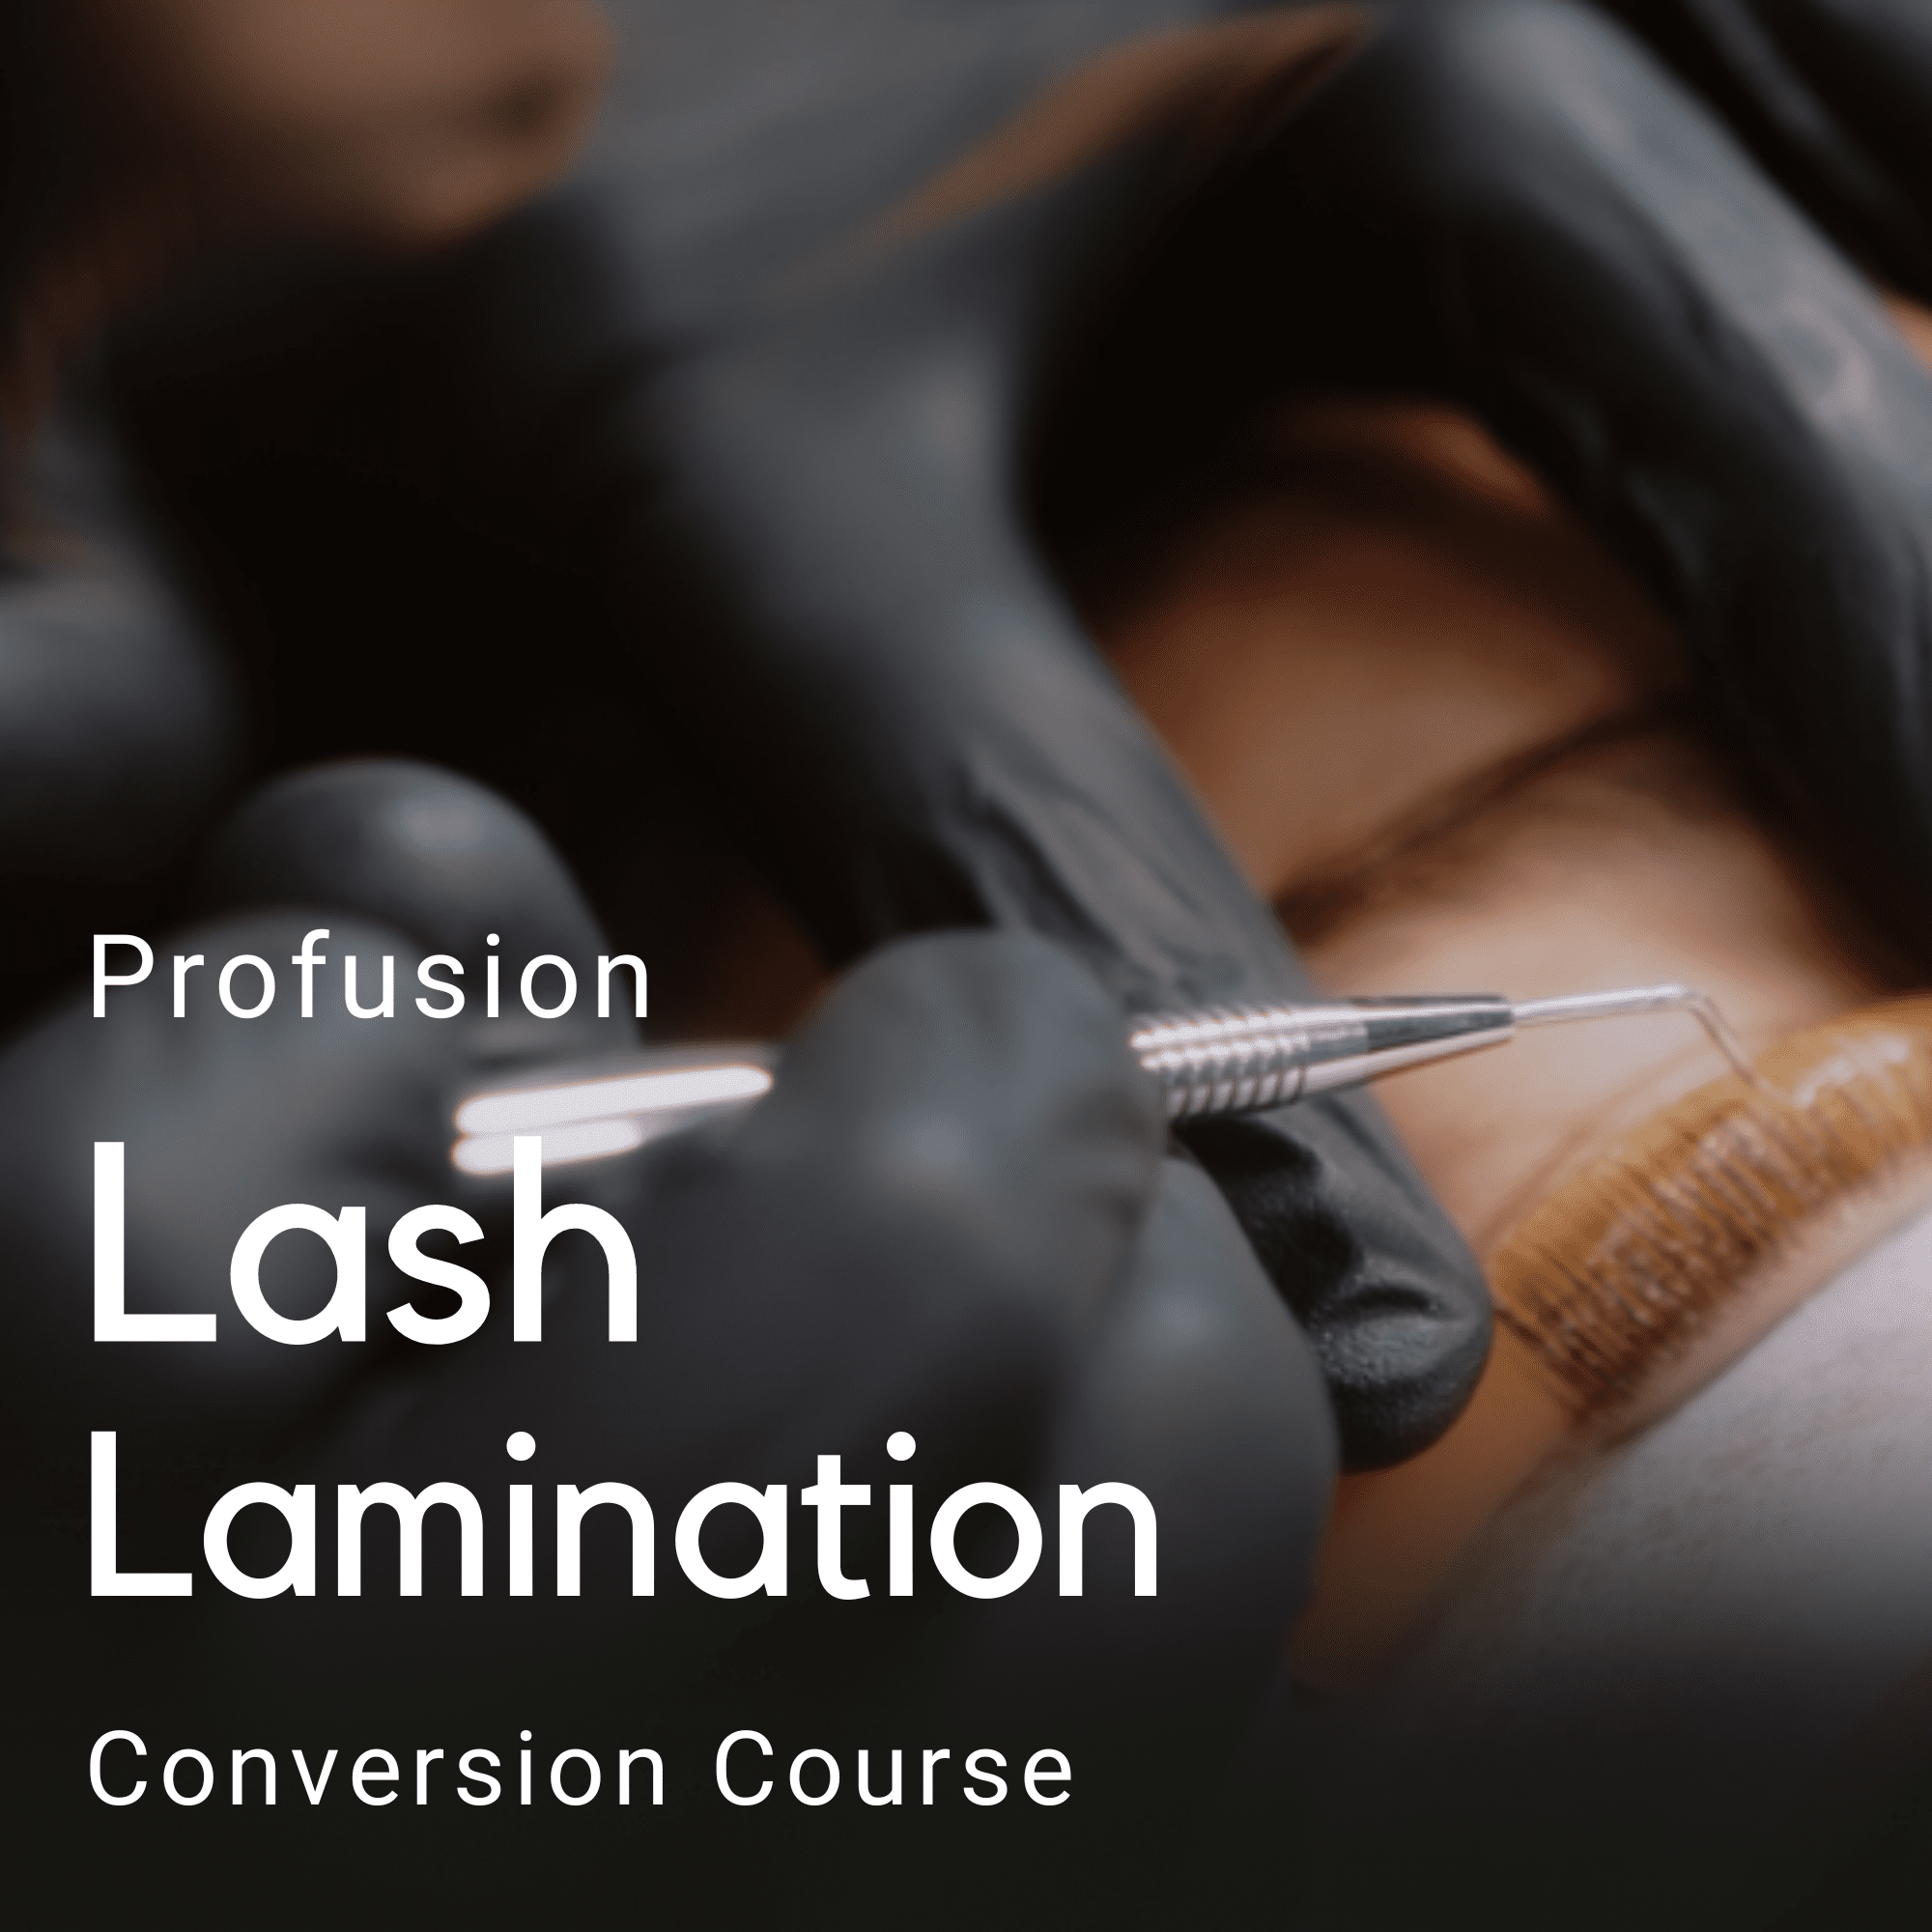 Profusion Lash Lamination - Conversion Course